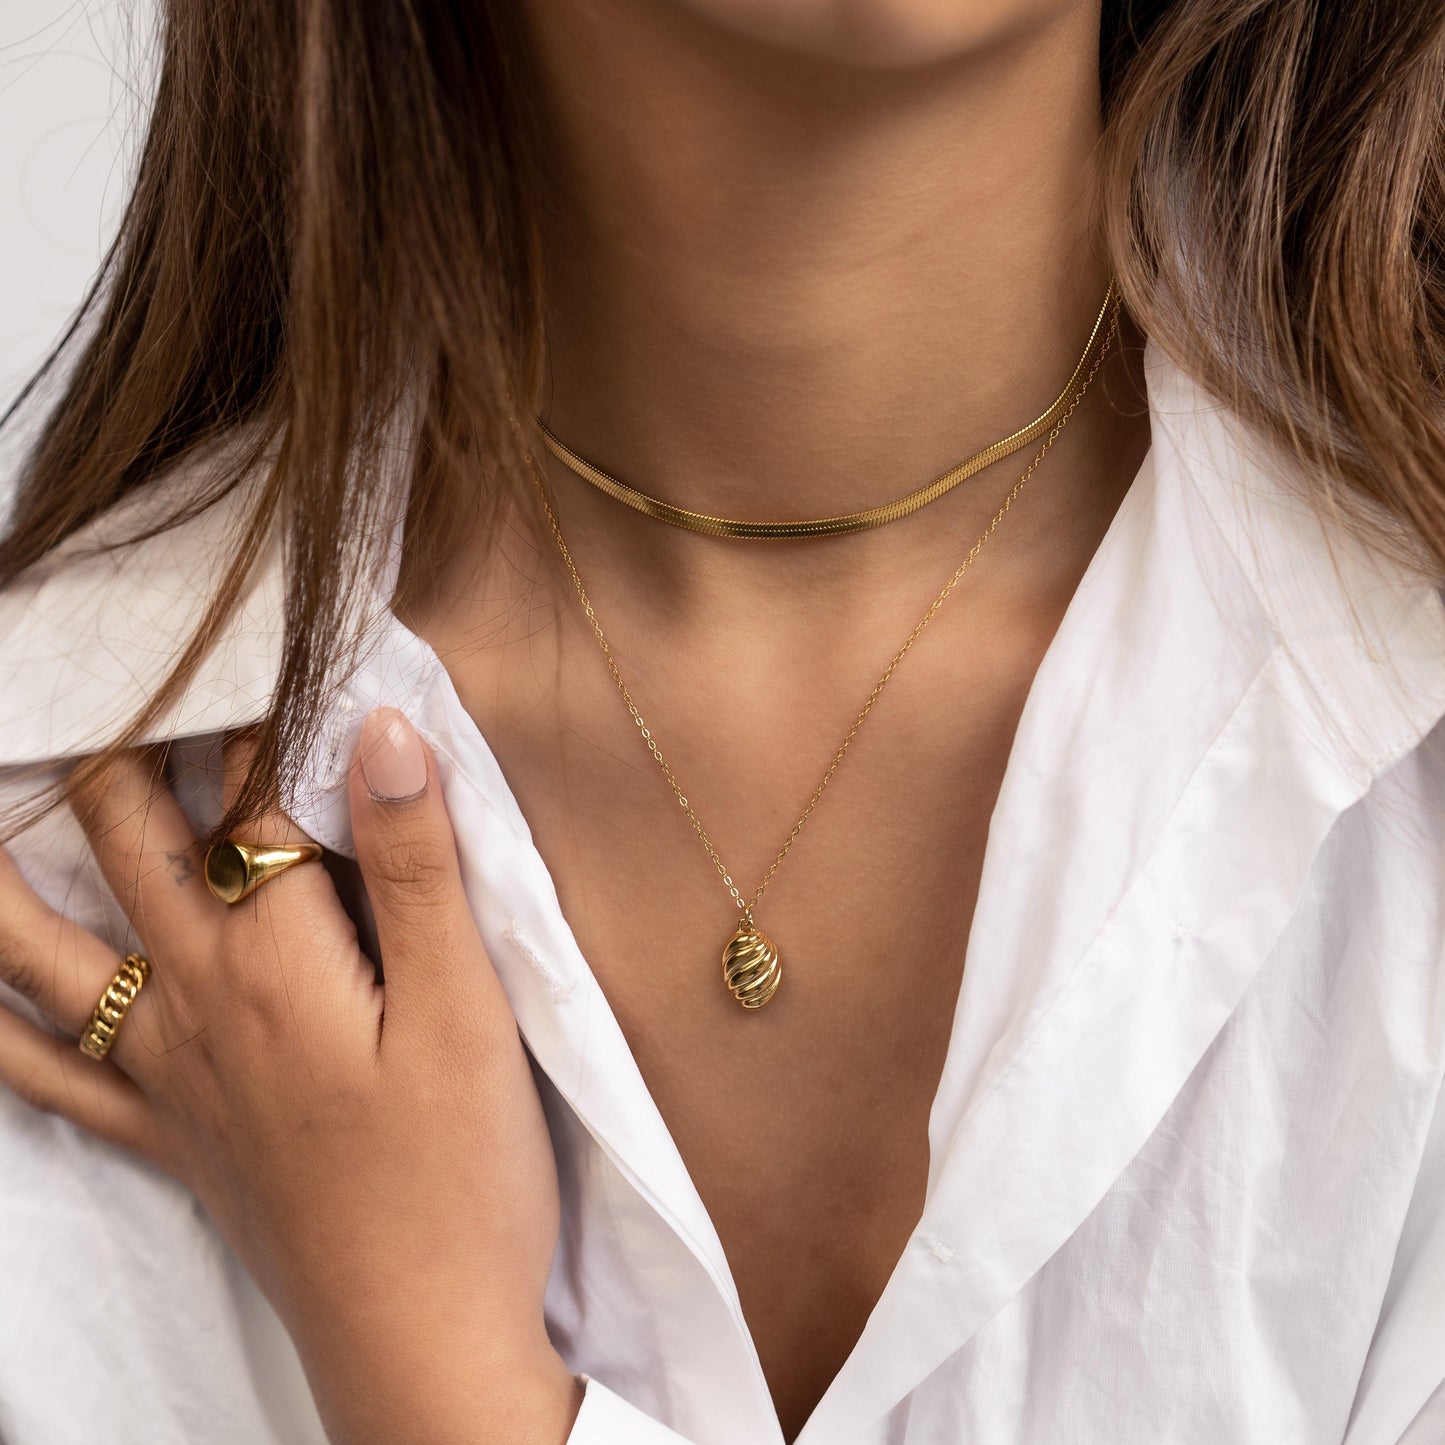 Petite Croissant Necklace | La Musa Jewellery